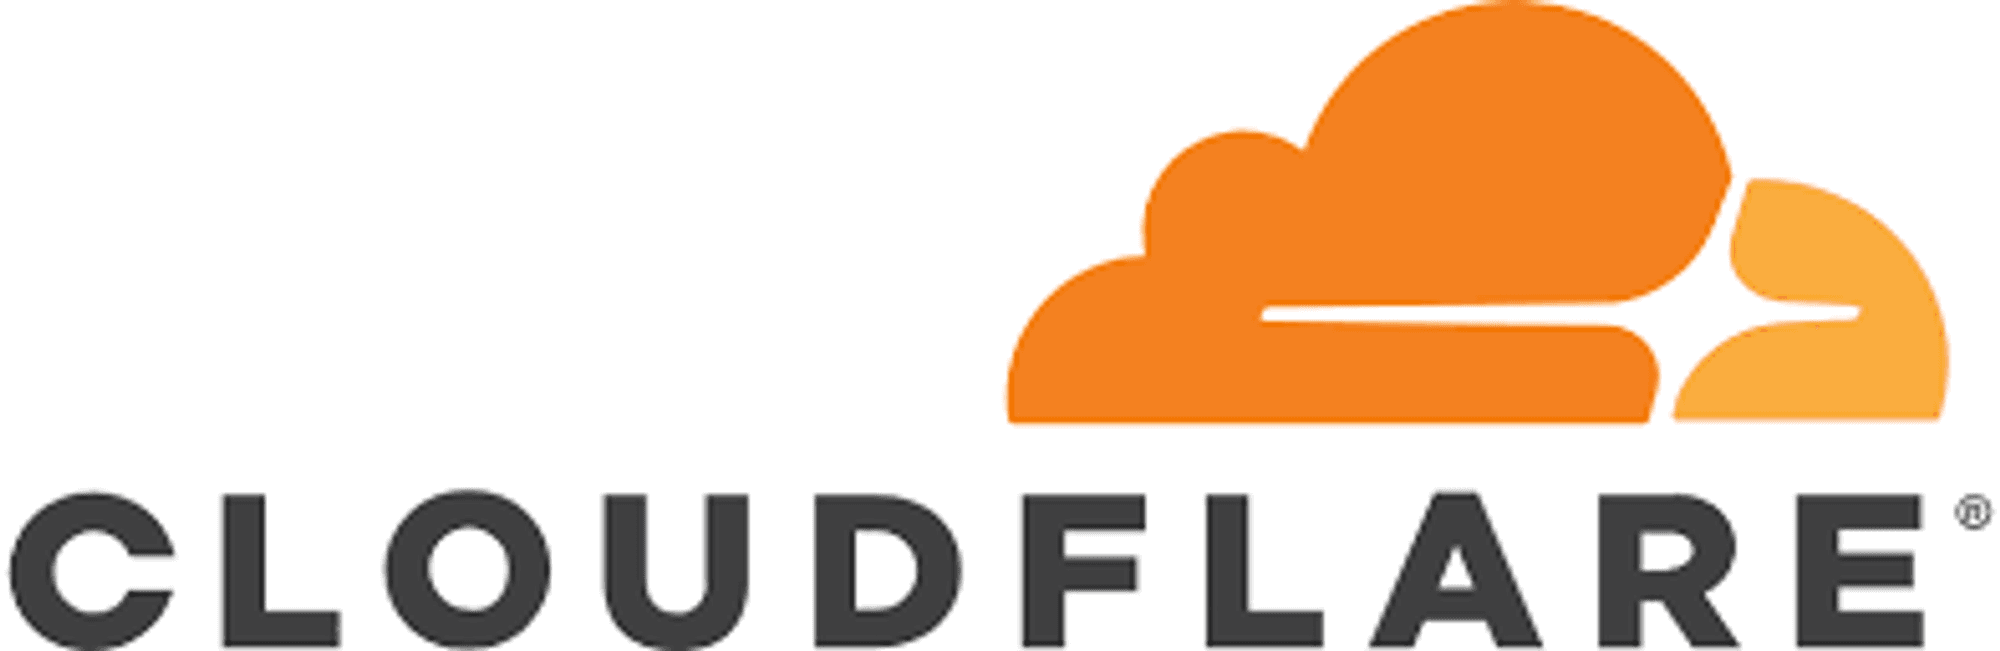 cloudflare workers应用系列之1: